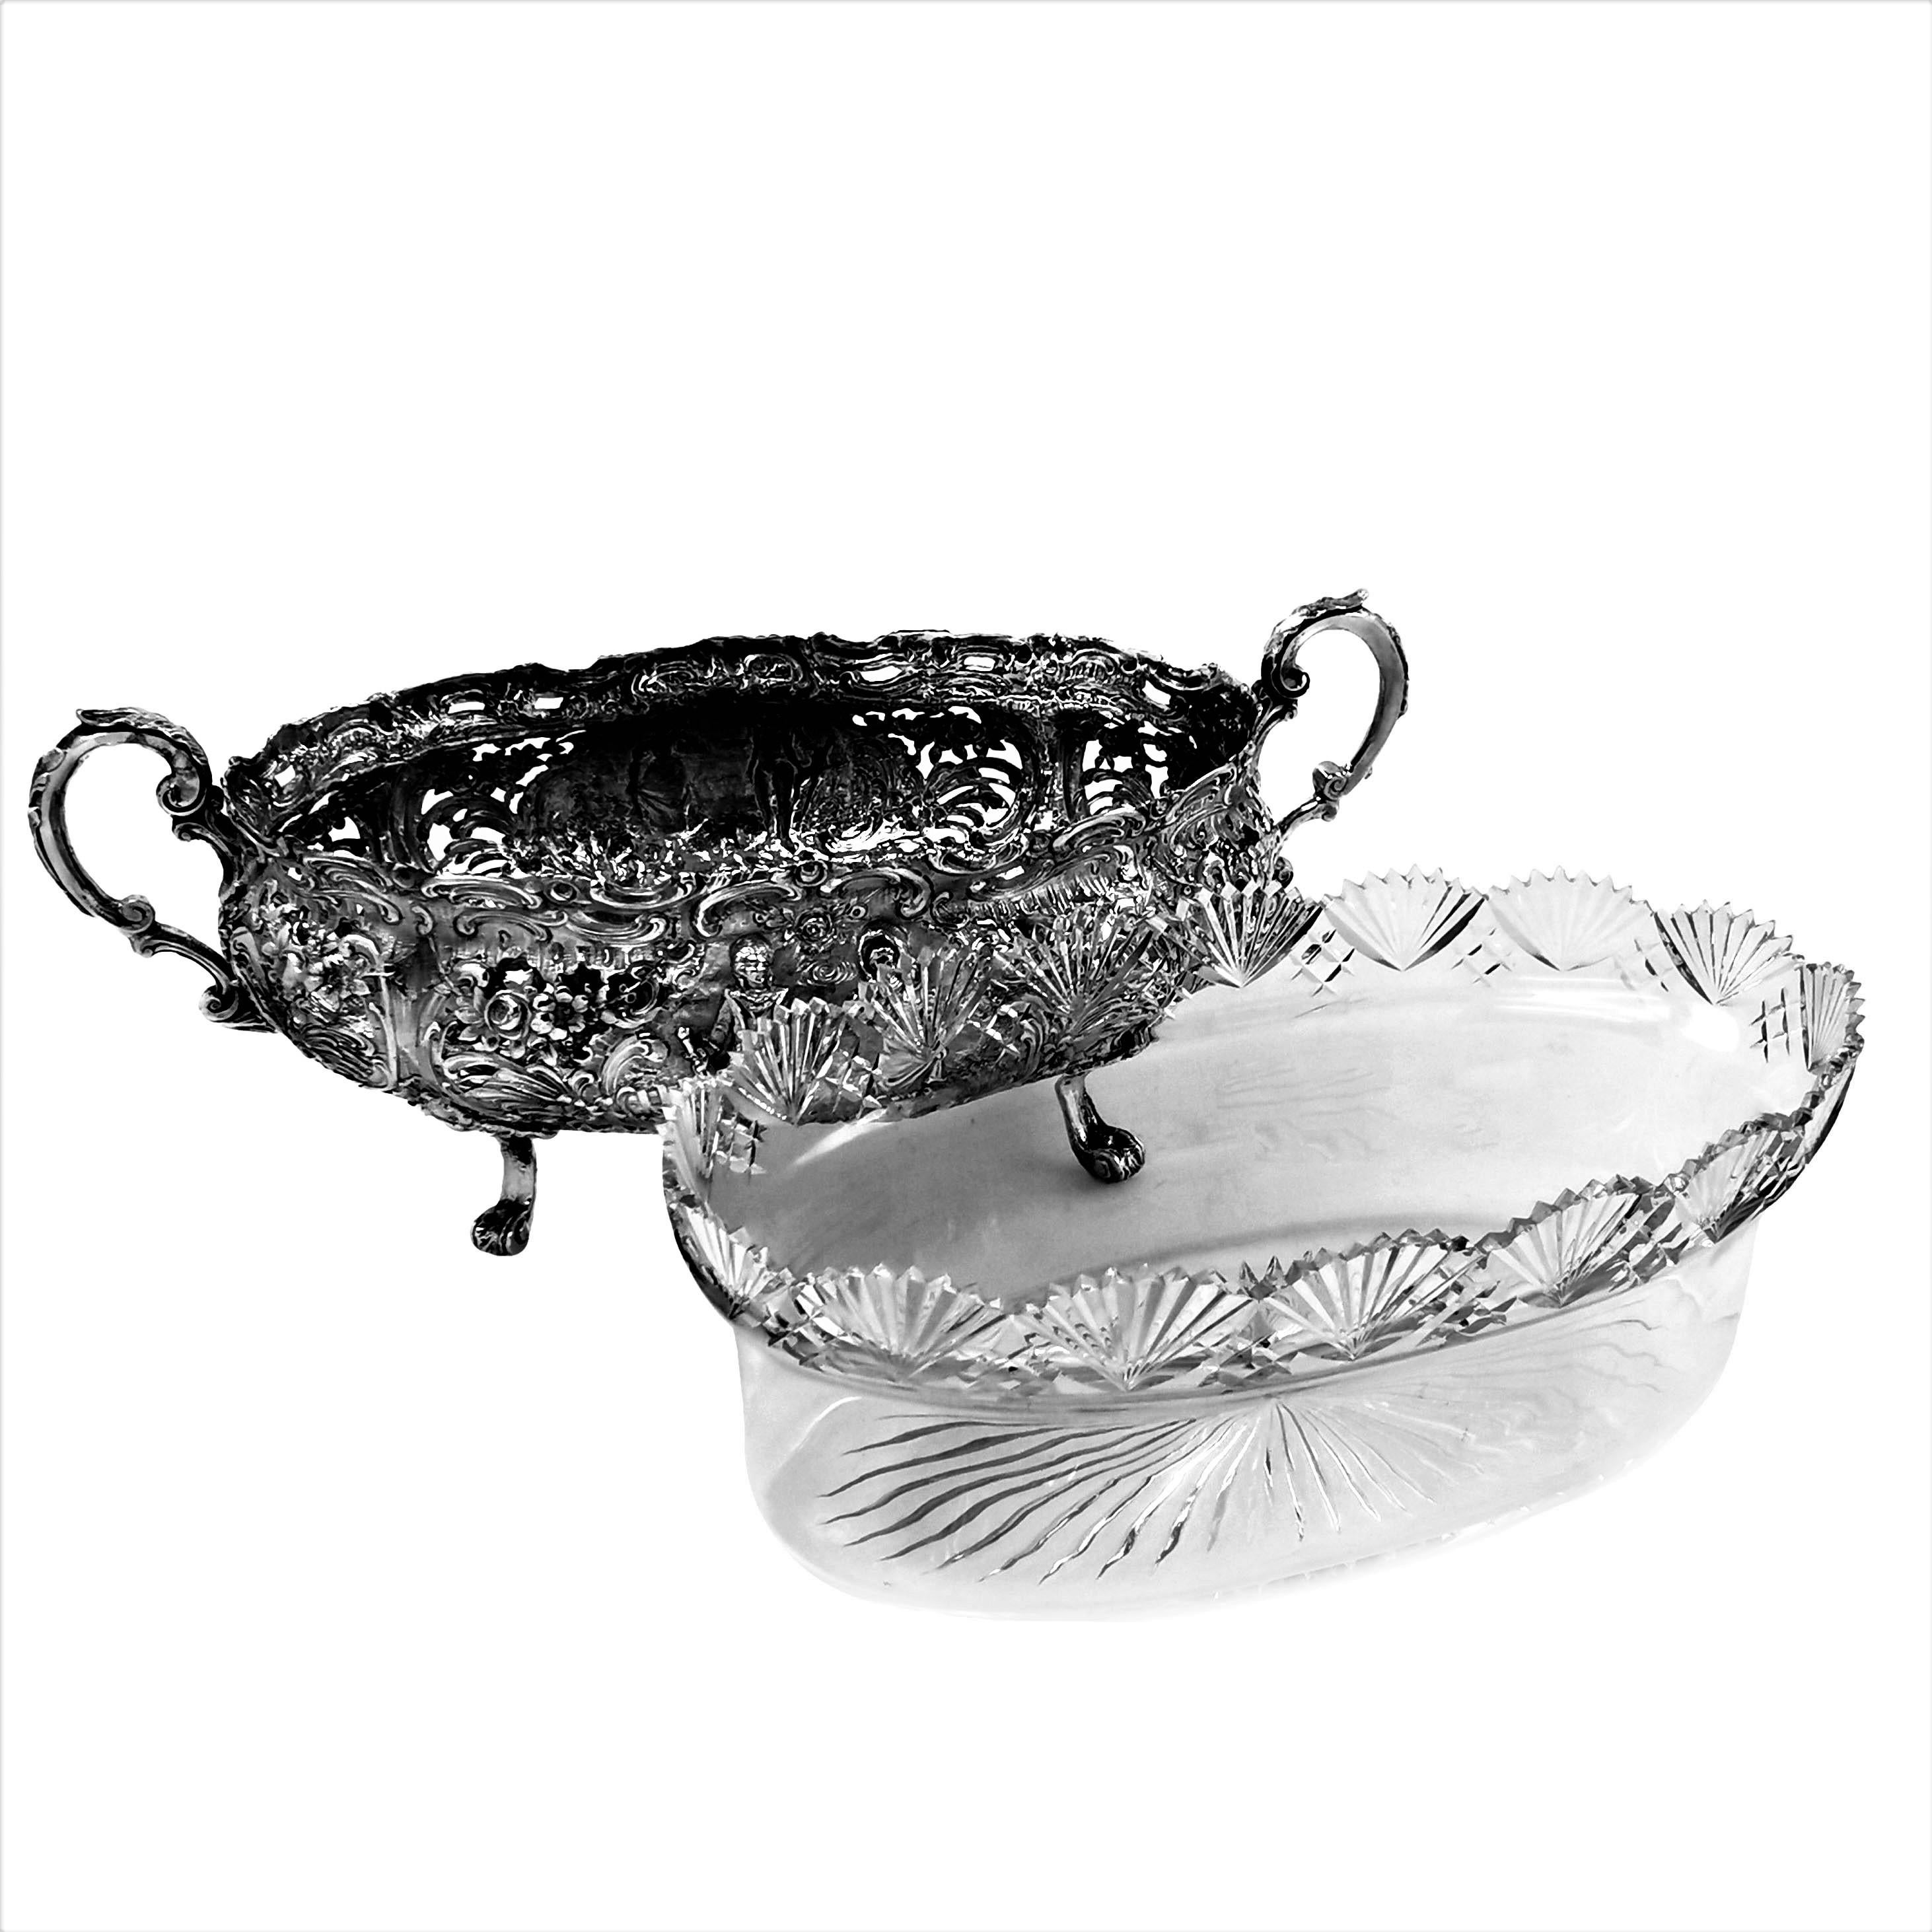 20th Century Antique German Solid Silver & Glass Dish / Bowl / Jardinière, c. 1900